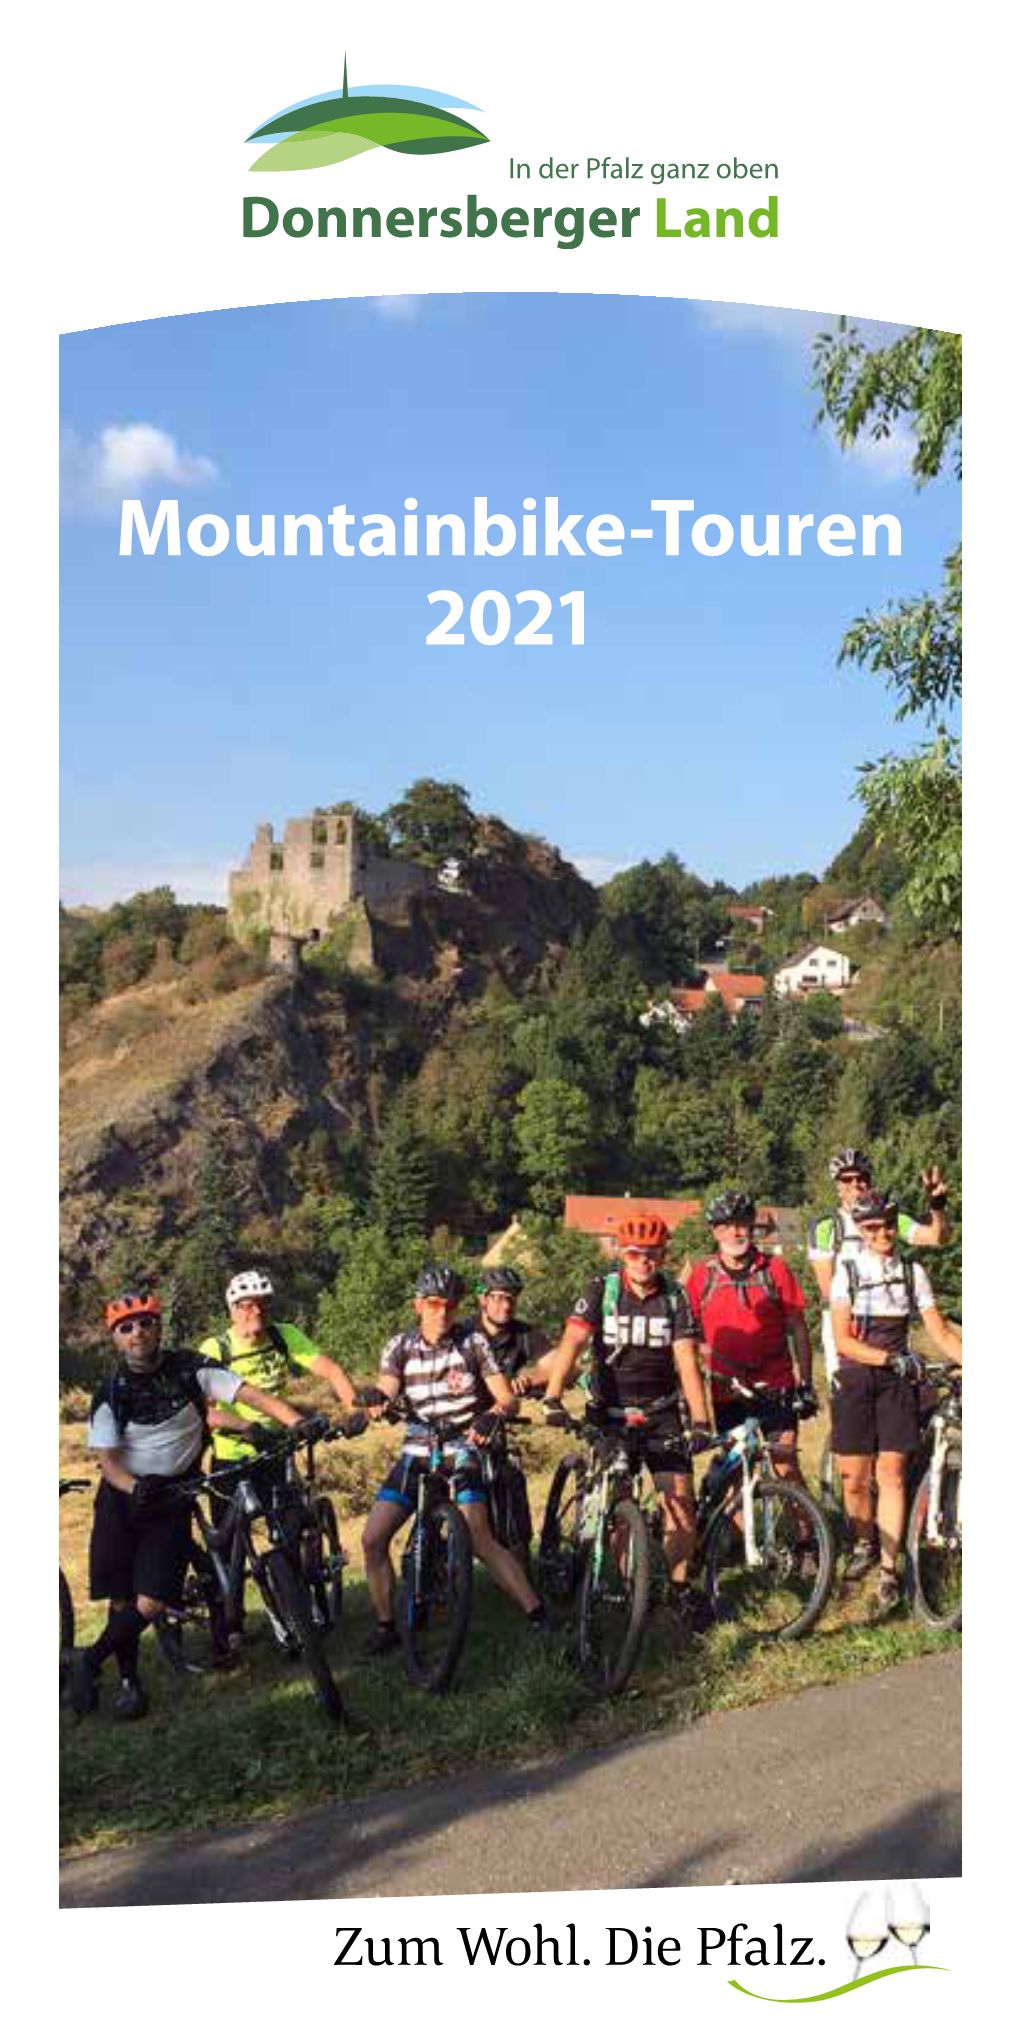 Mountainbike-Touren 2021 Mountainbike-Touren Im Donnersberger Land